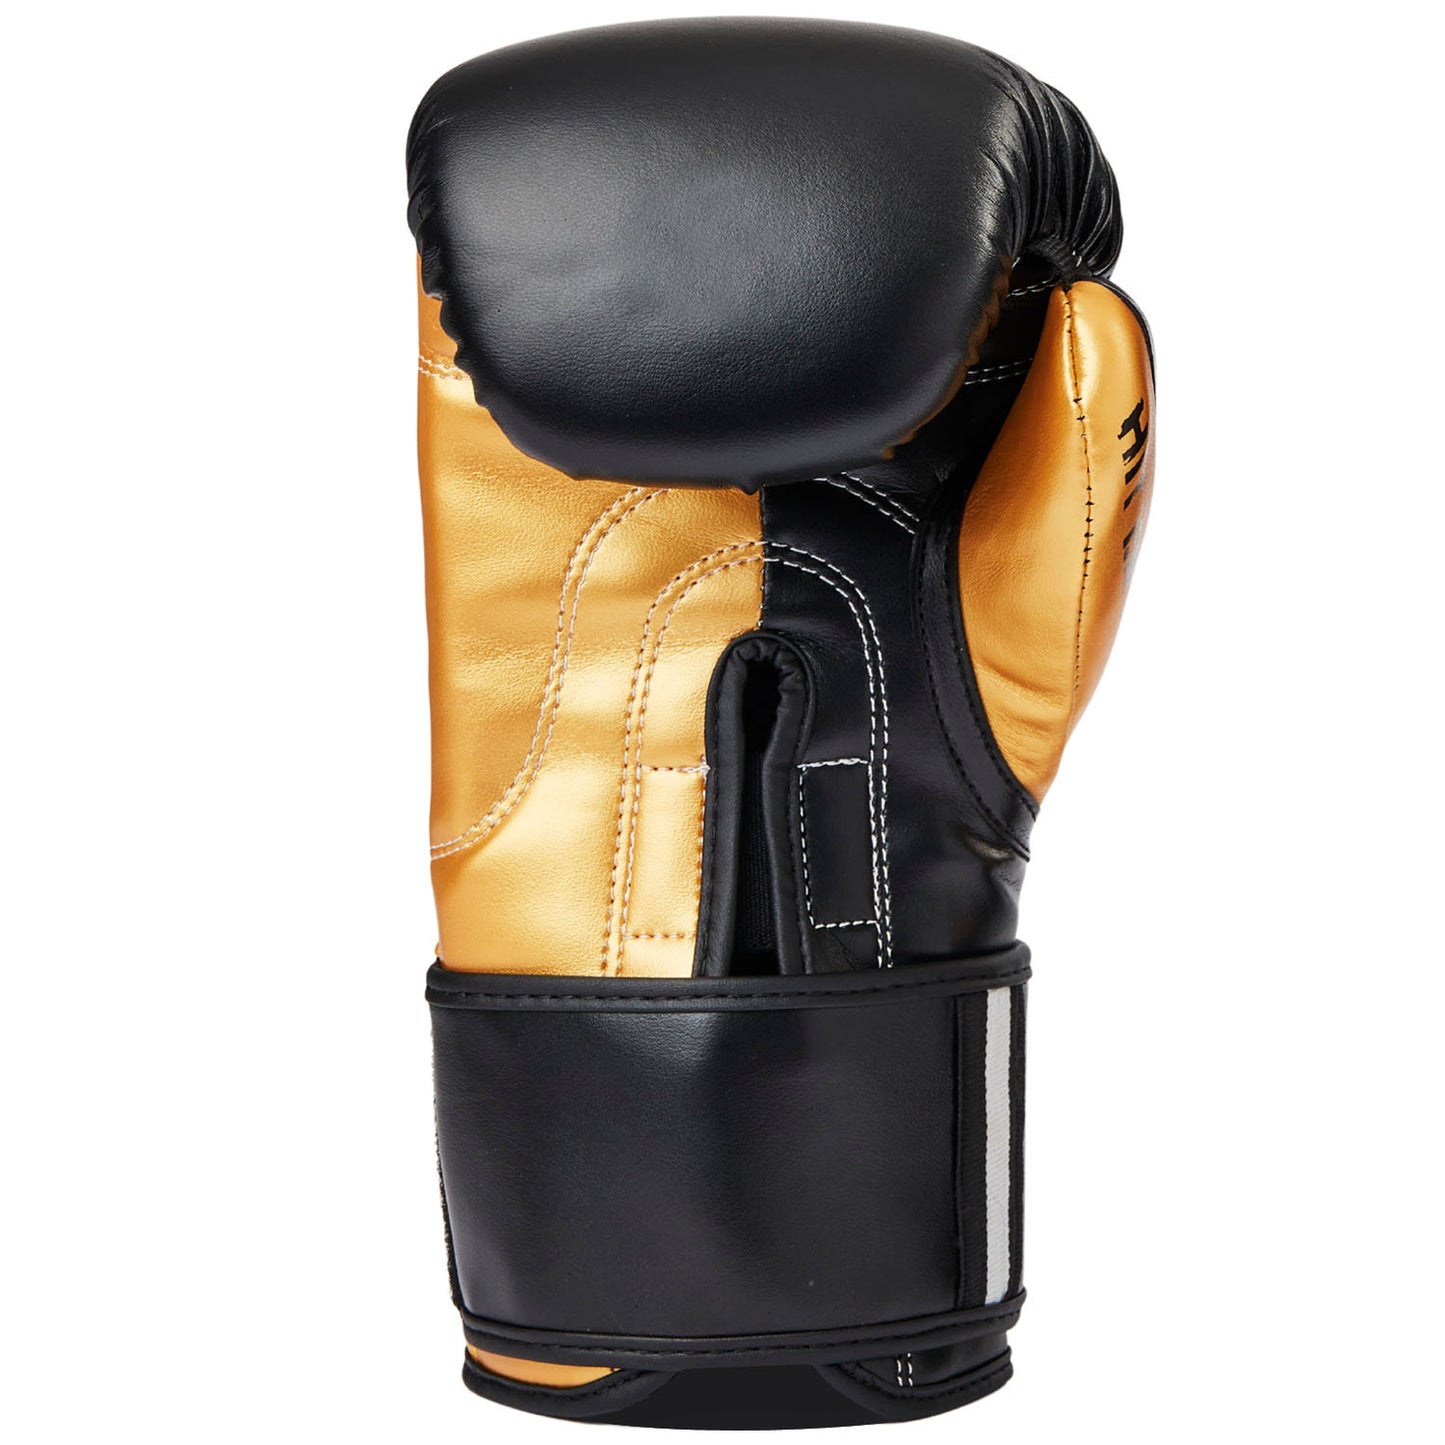 Rhino Boxing Gloves- Gold